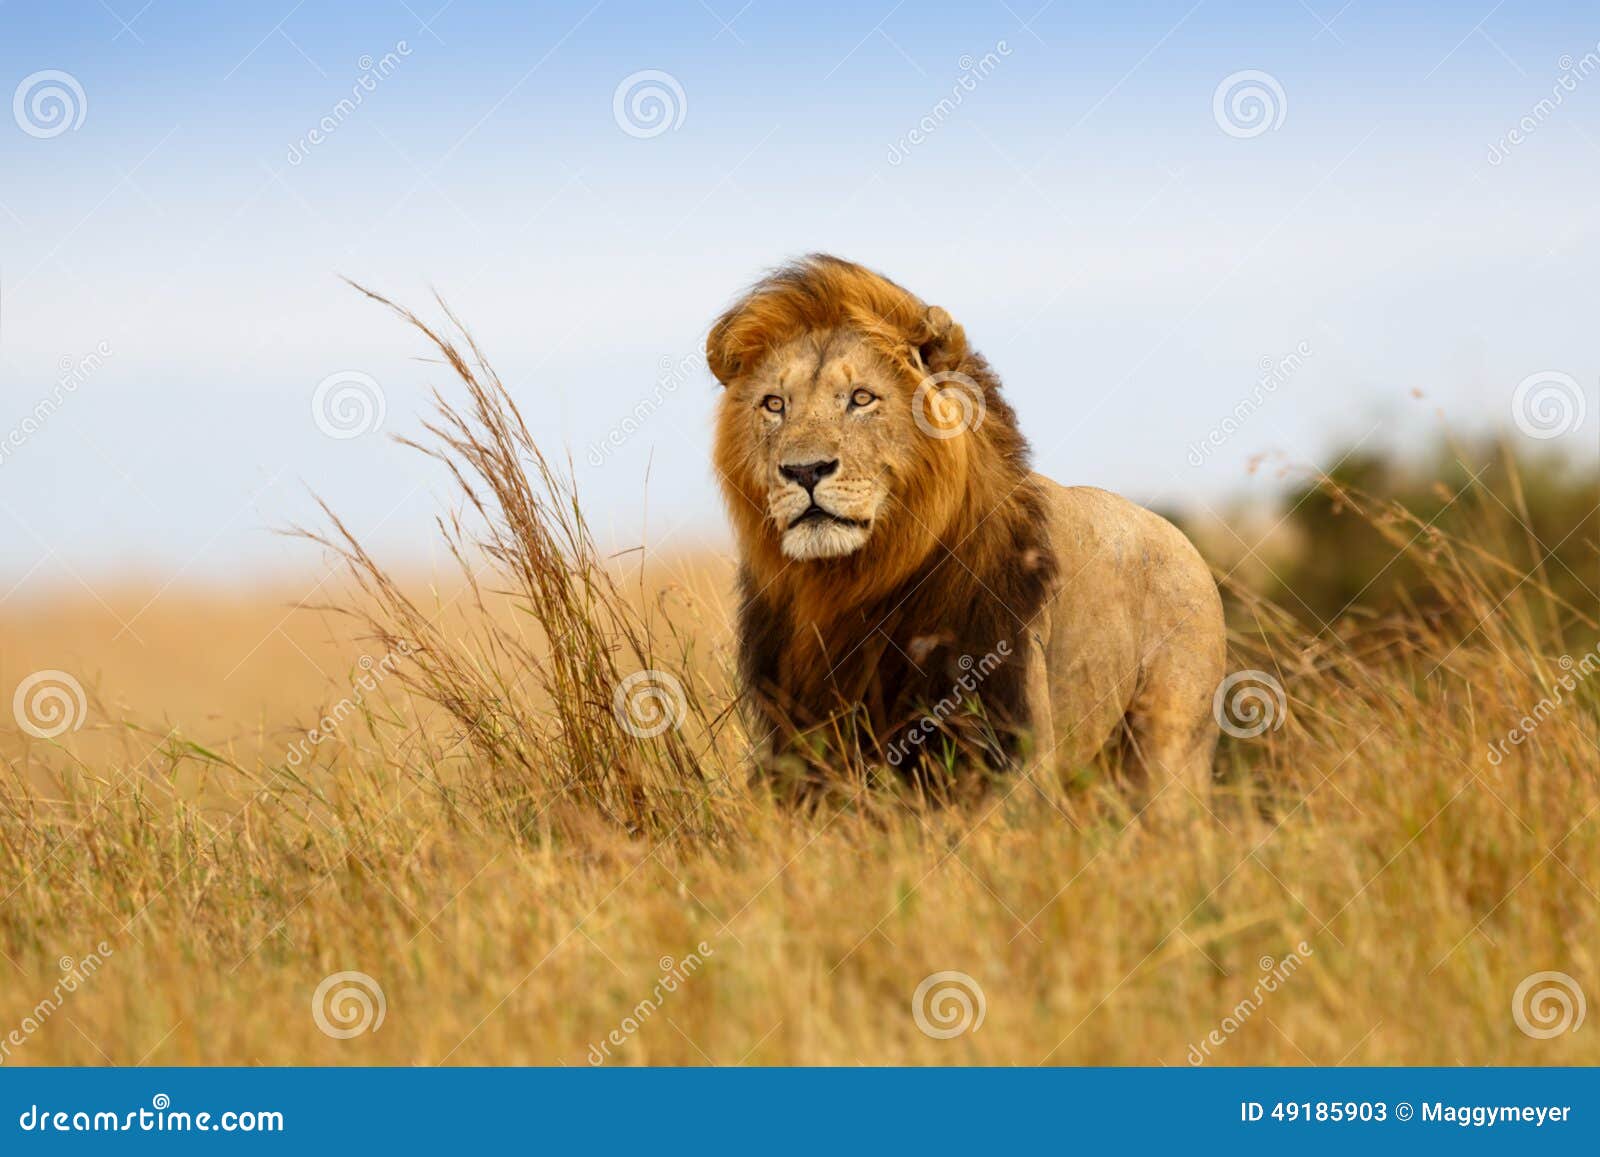 beautiful lion caesar